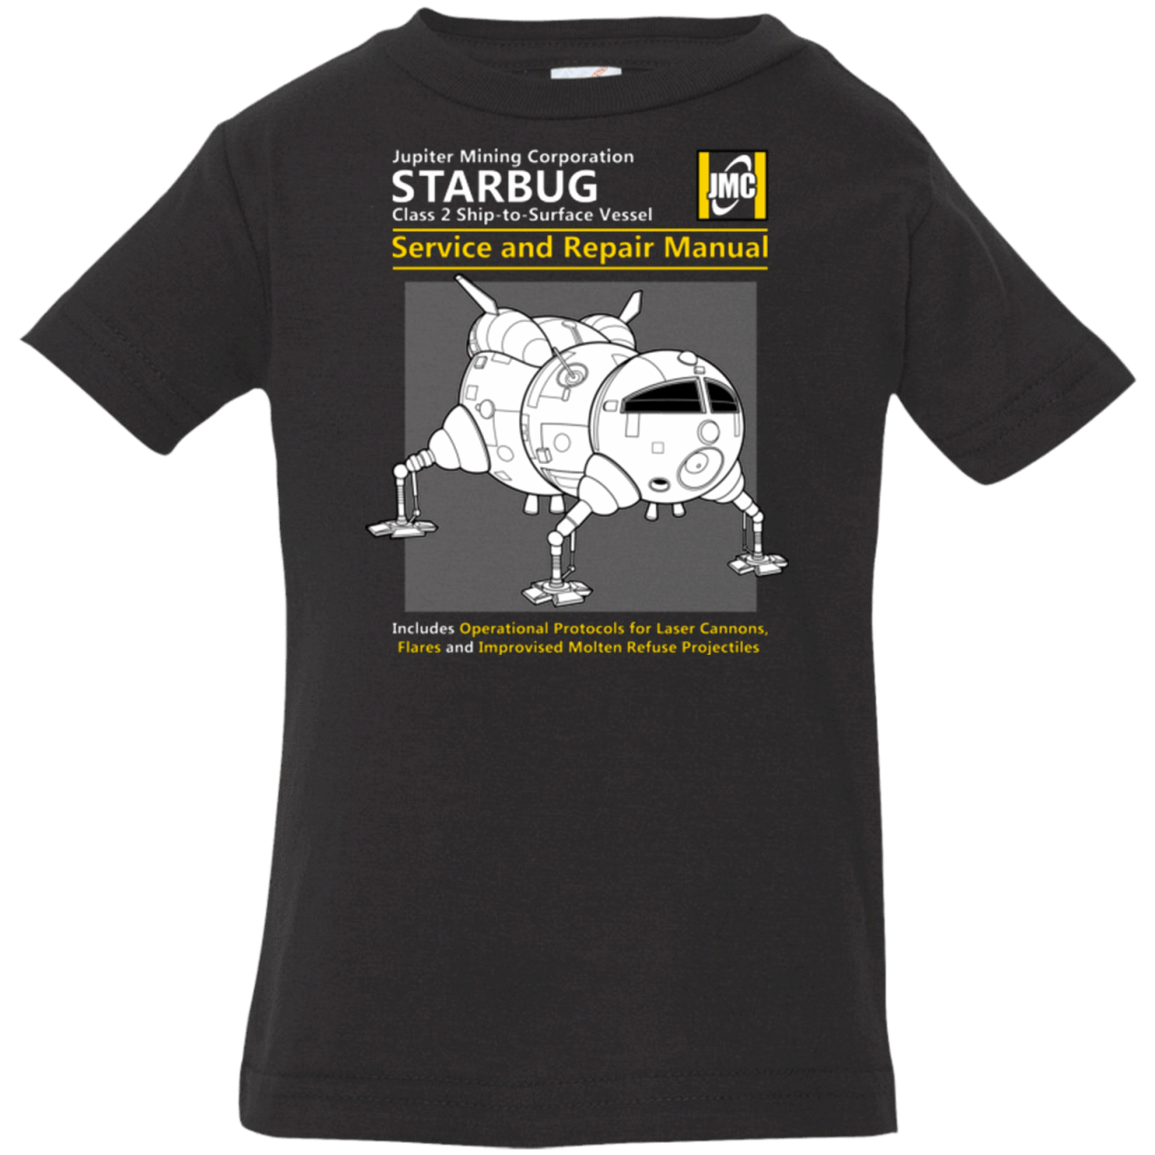 T-Shirts Black / 6 Months Starbug Service And Repair Manual Infant Premium T-Shirt